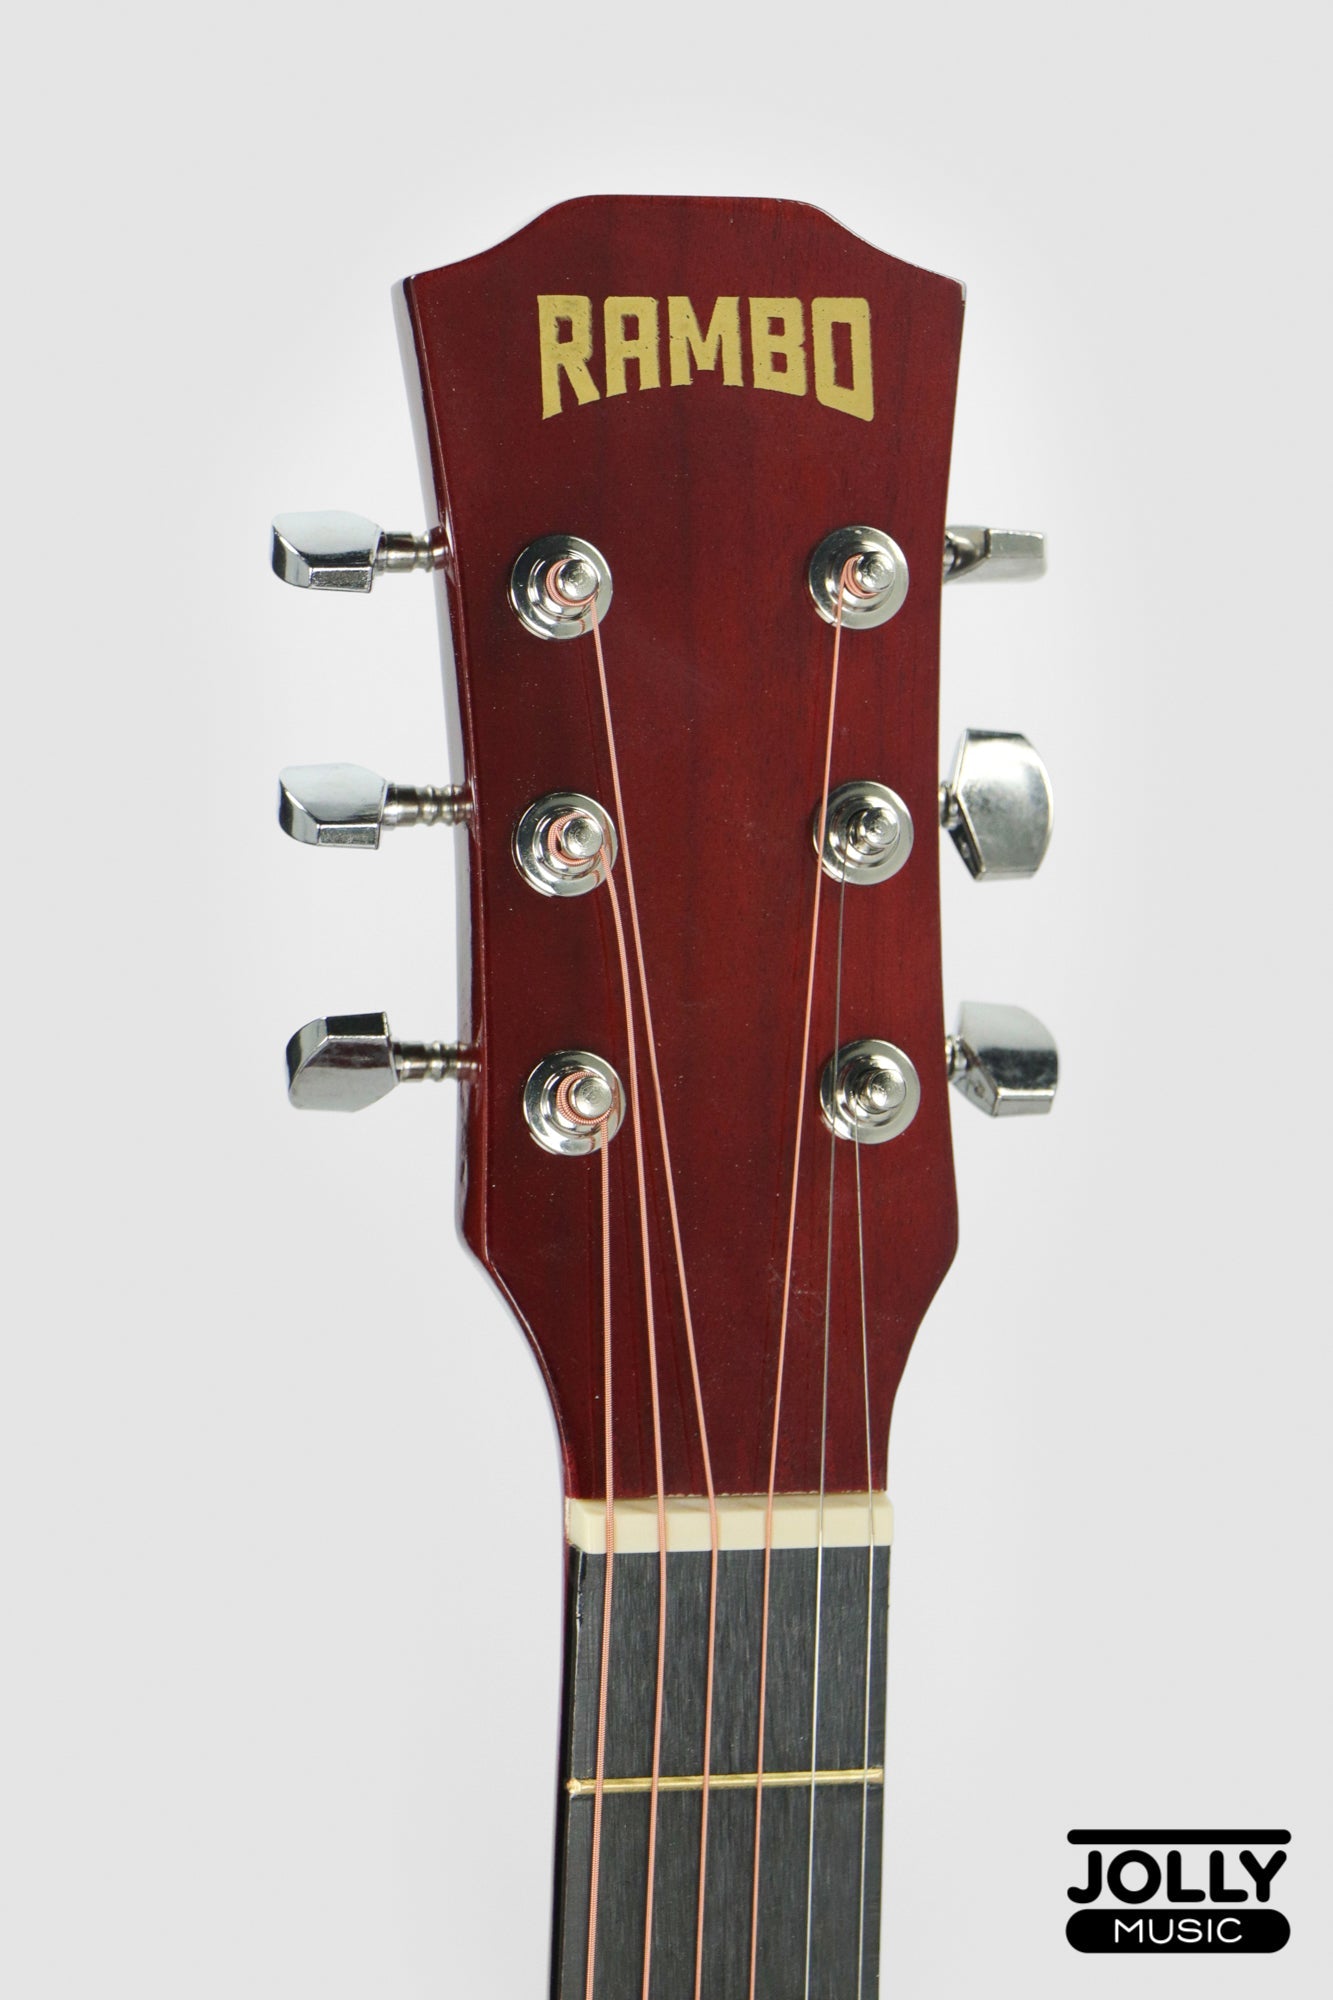 Rambo 38" Guitar K-38LT Truss Rod w/ Case, 3 Picks, Tuner, Capo - Sunburst